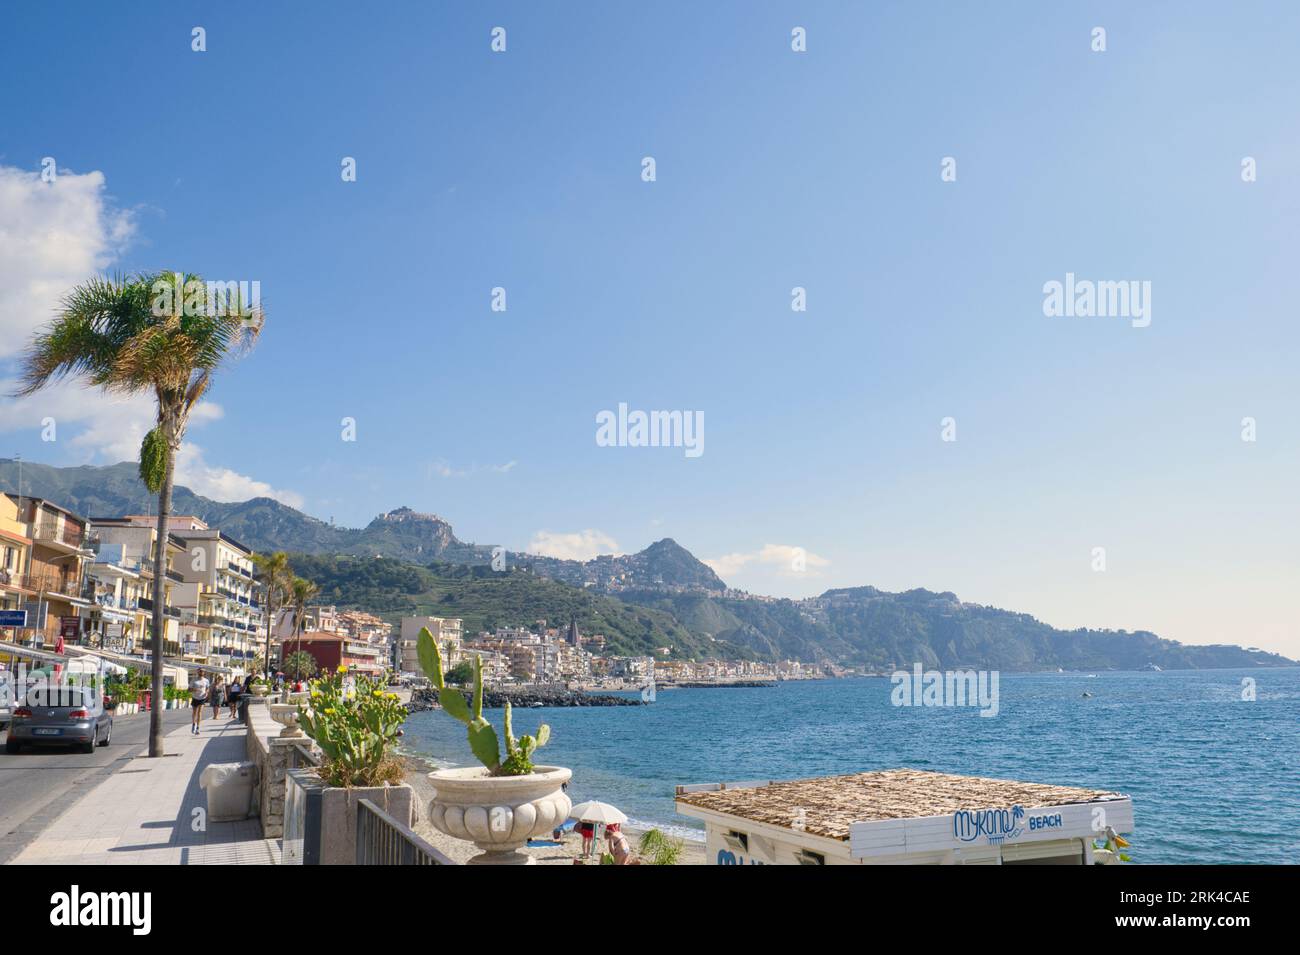 Giardini Naxos, Italy,  views of the blue sea and the mountains where Taormina is located Stock Photo